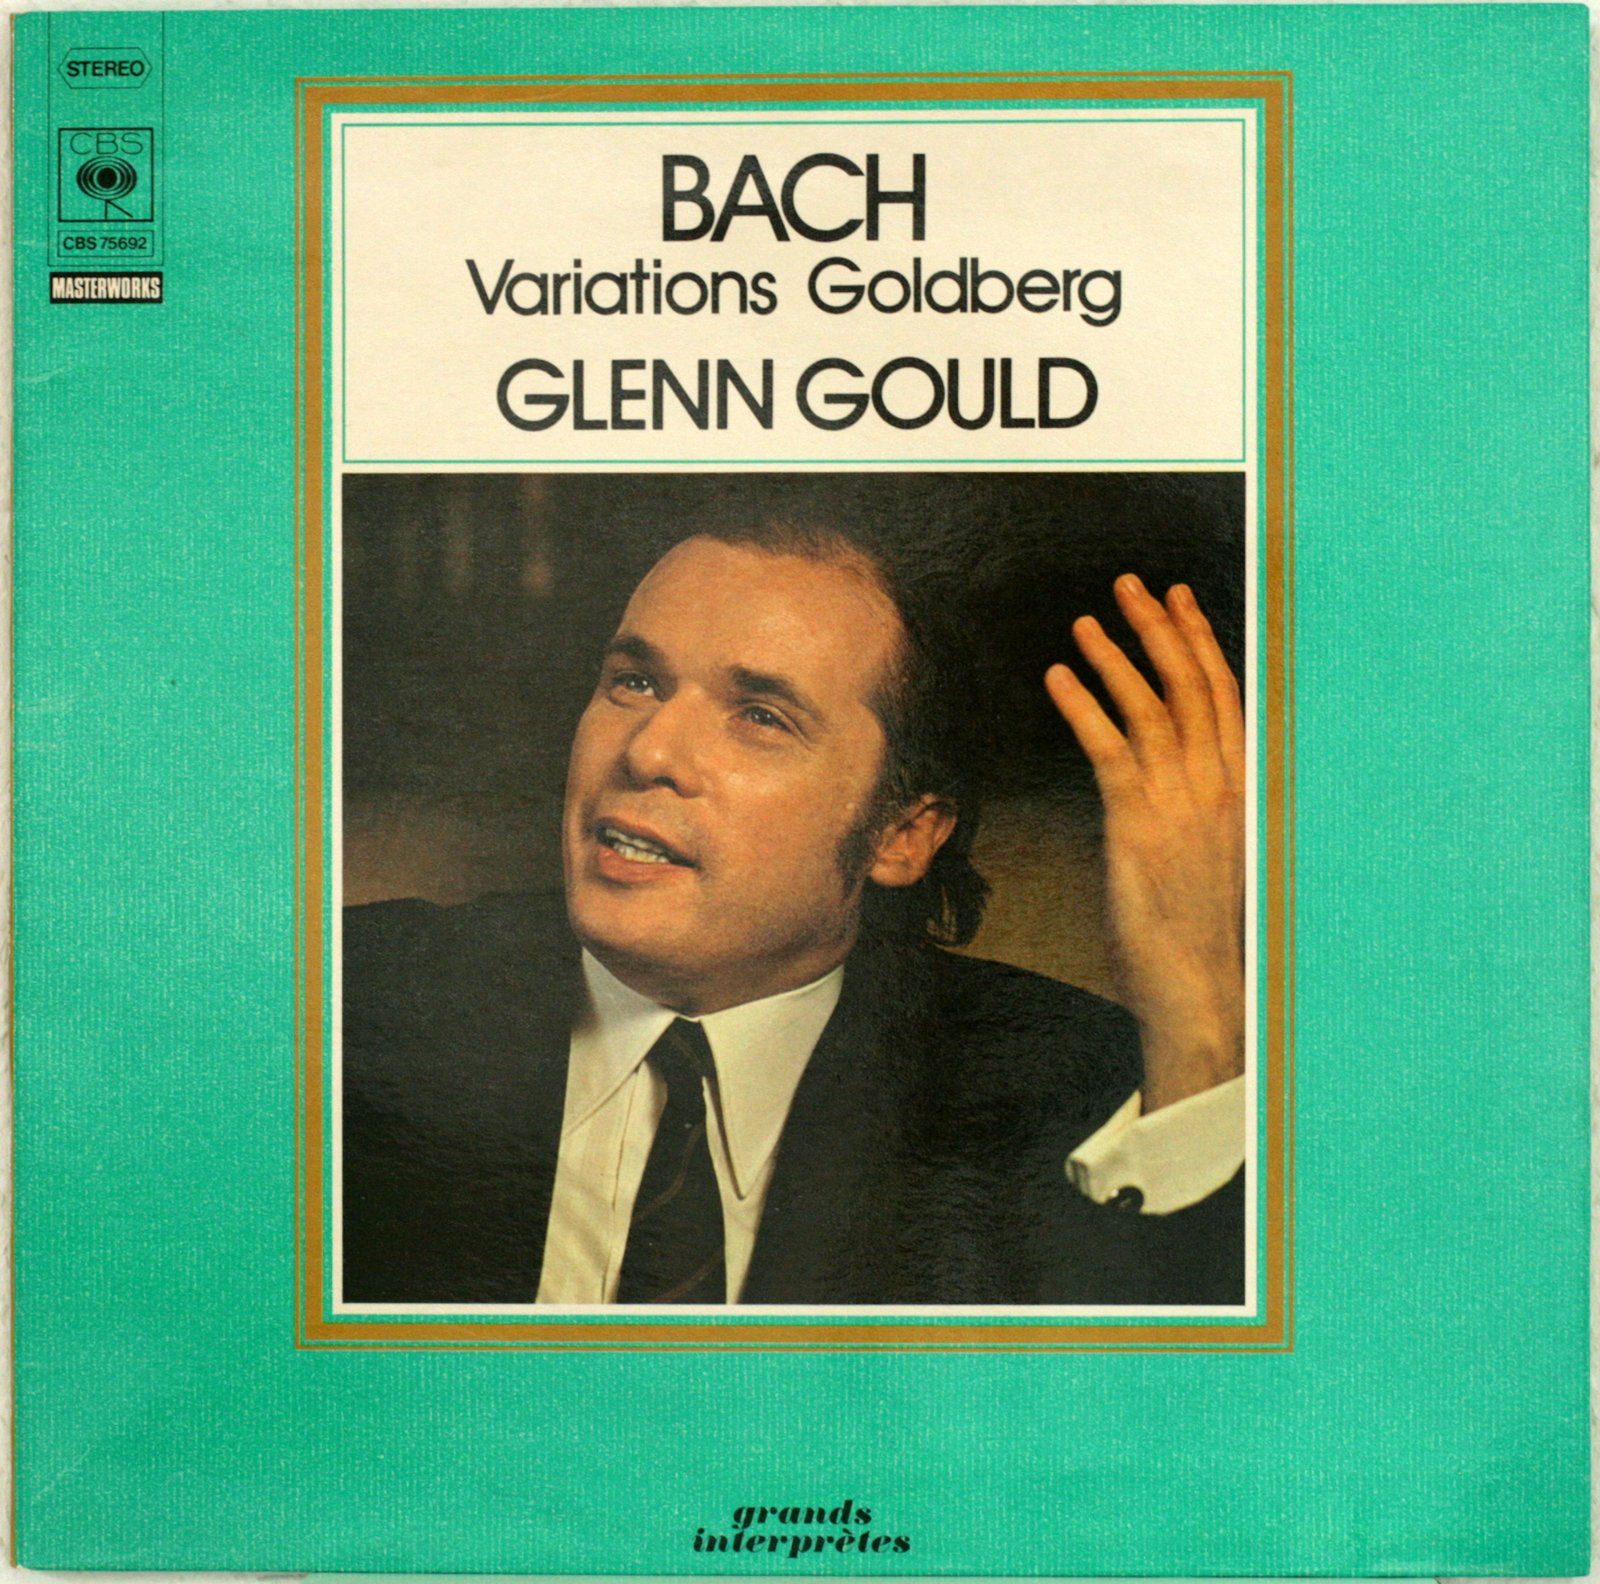 Bach • Les variations Goldberg • BWV 988 • CBS 75 692 • Glenn Gould • Version 1955